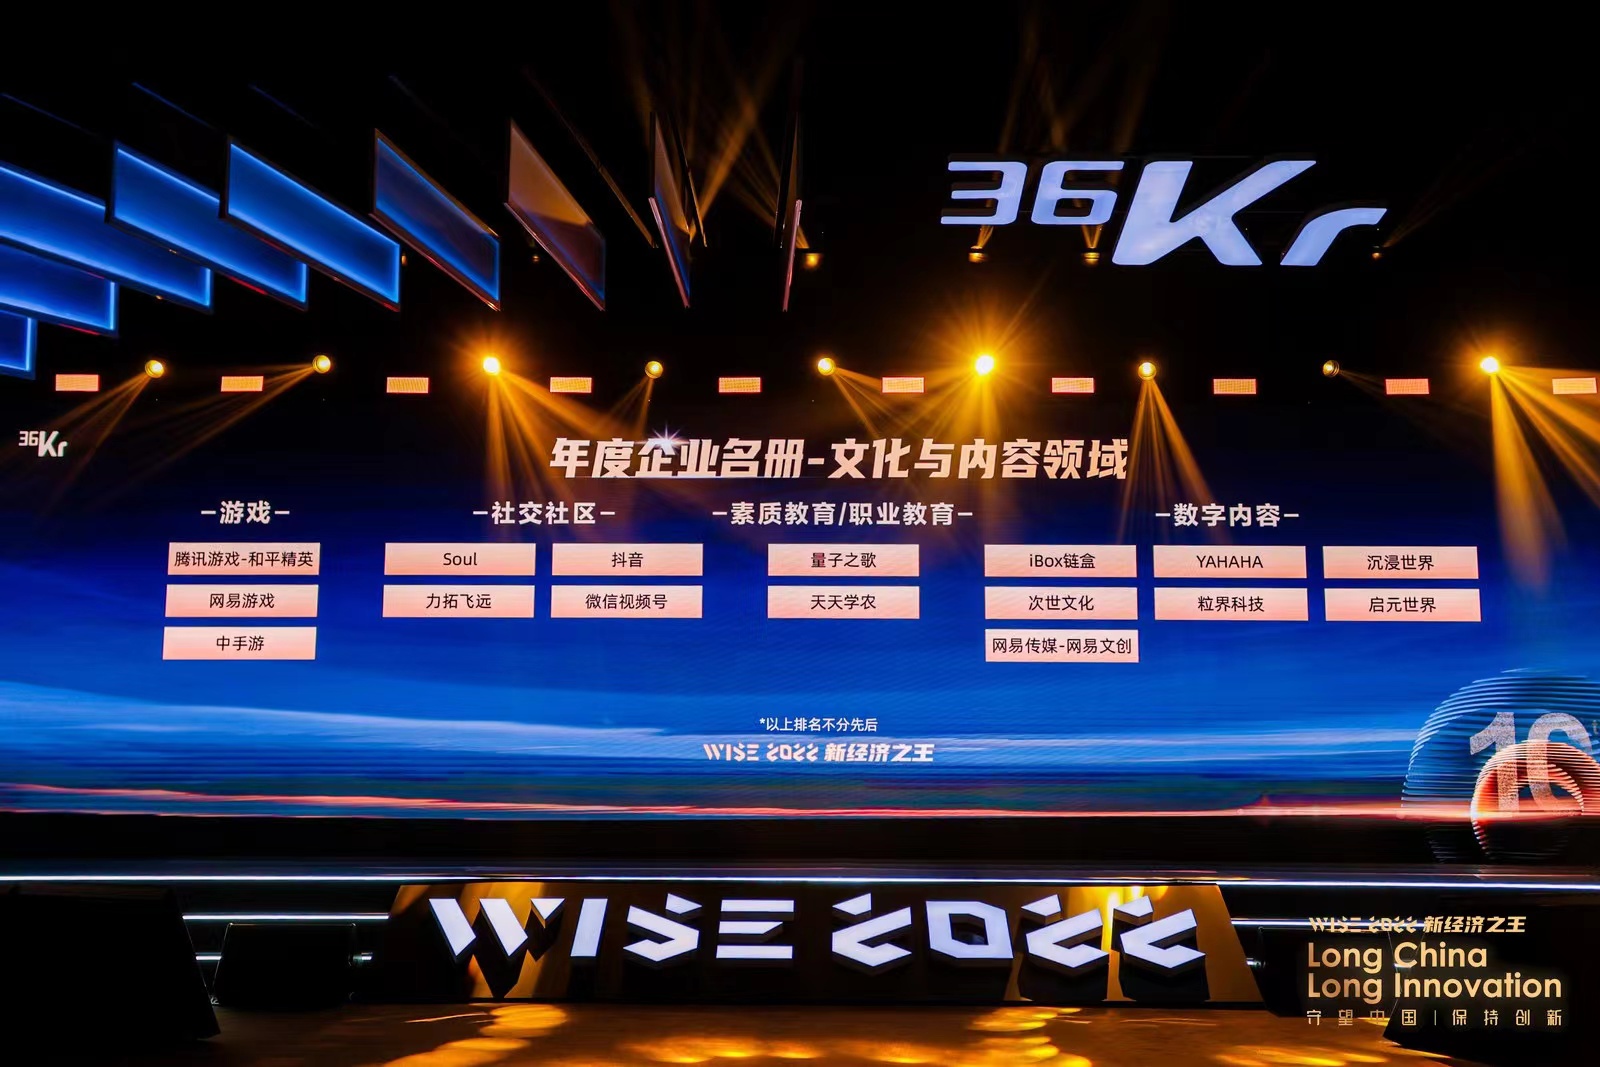 WISE2022 iBox链盒荣获数字内容年度企业深受行业认可